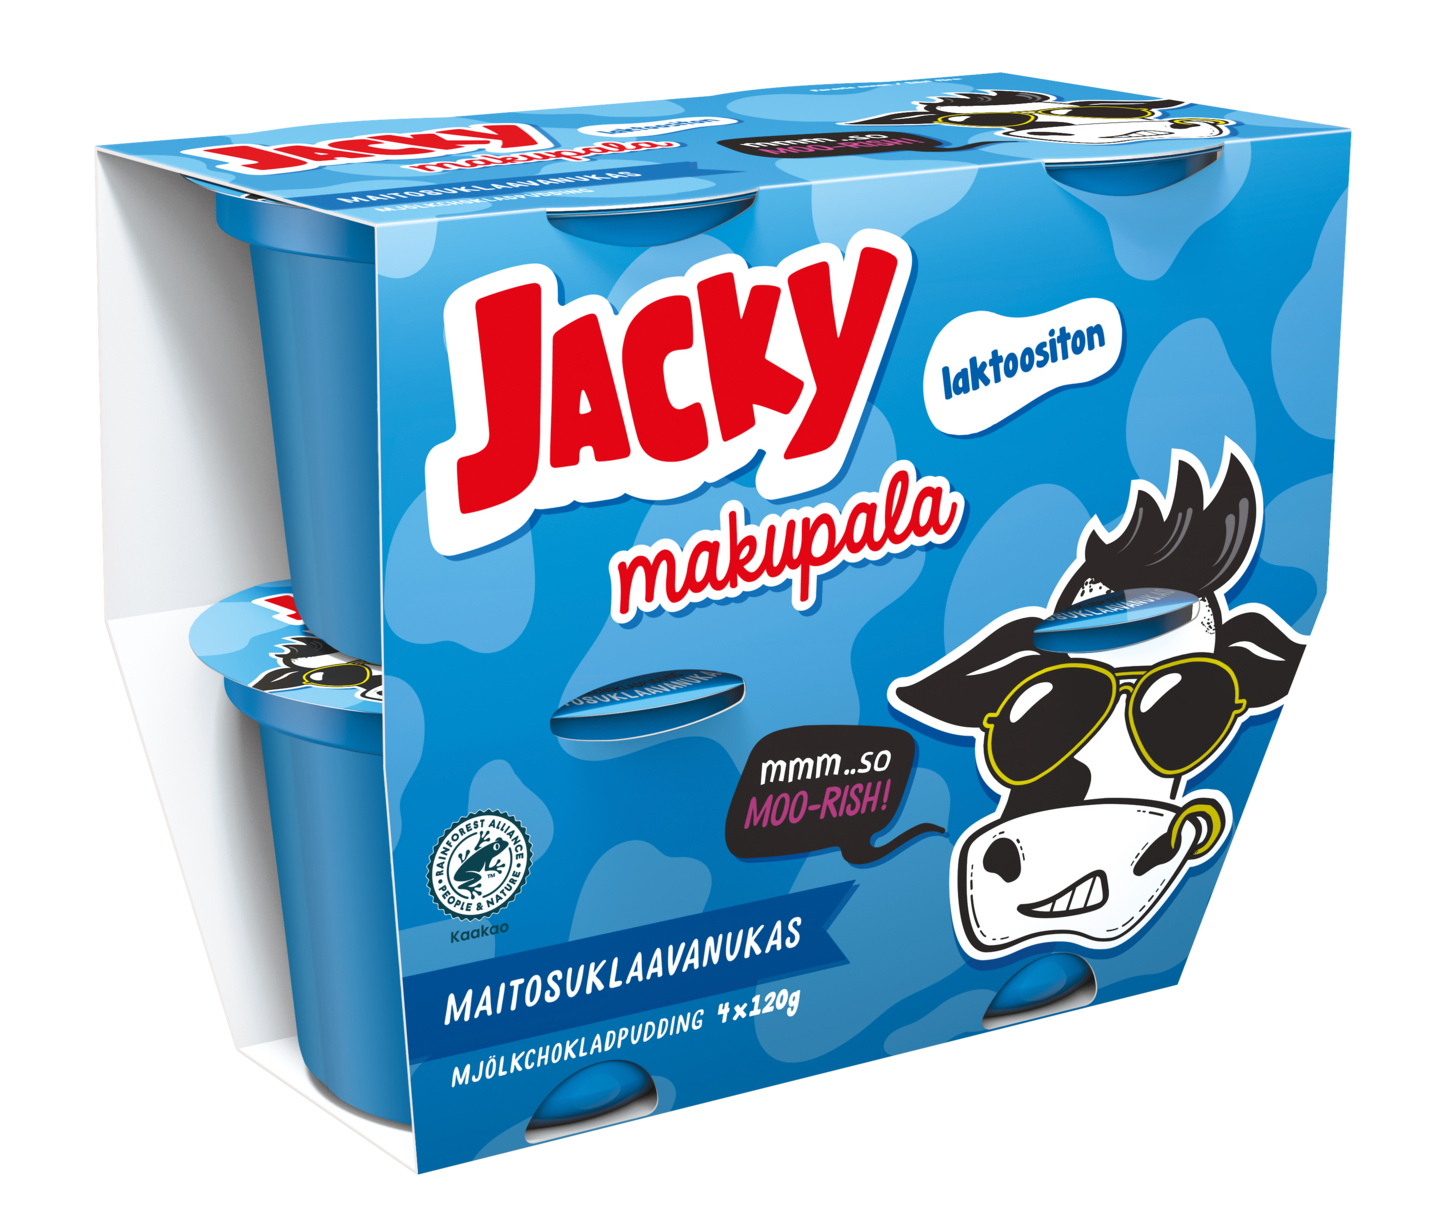 Jacky Makupala vanukas 4x120g maitosuklaa laktoositon